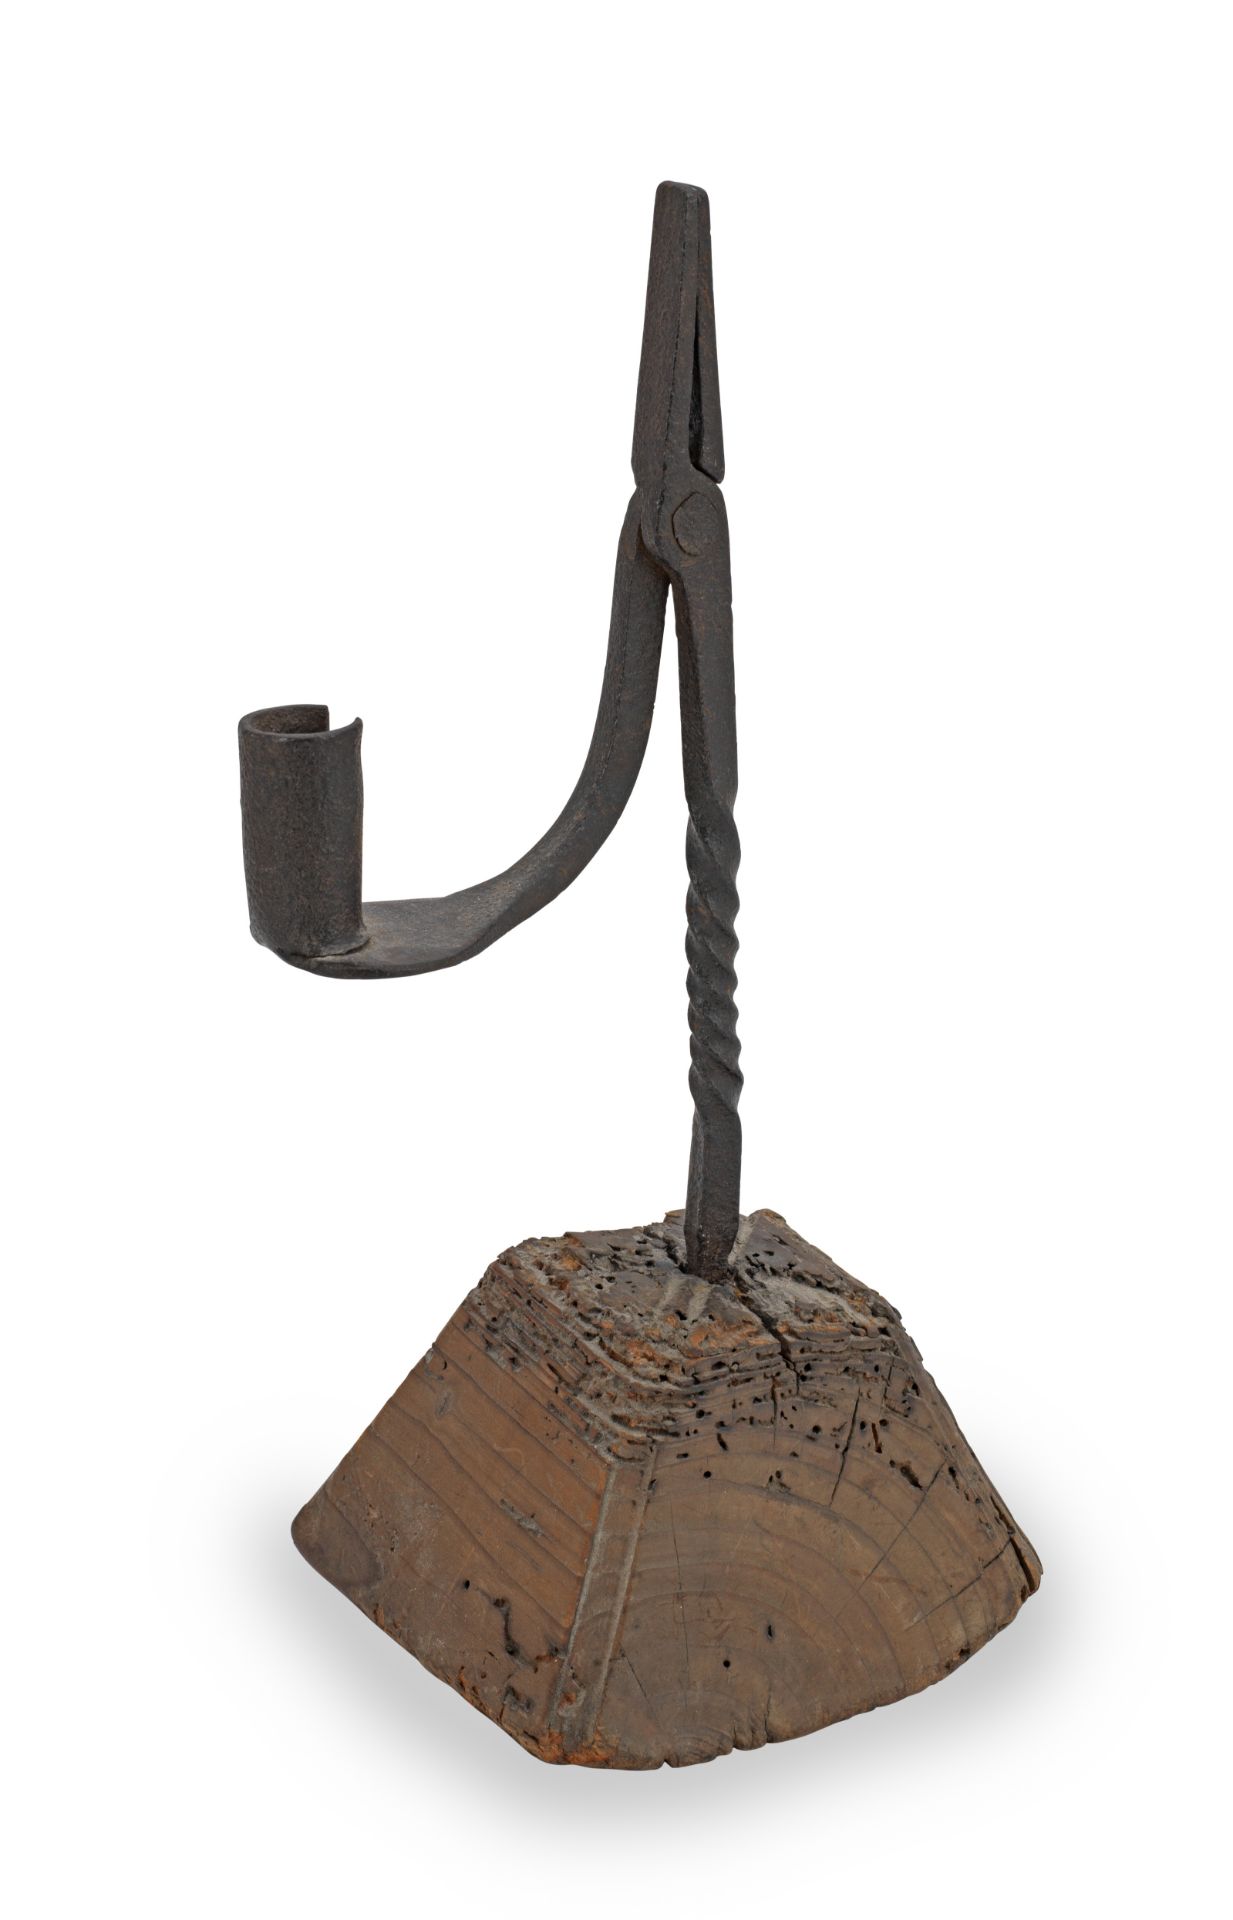 An early to mid-19th century iron rushlight holder, Irish, circa 1800-50